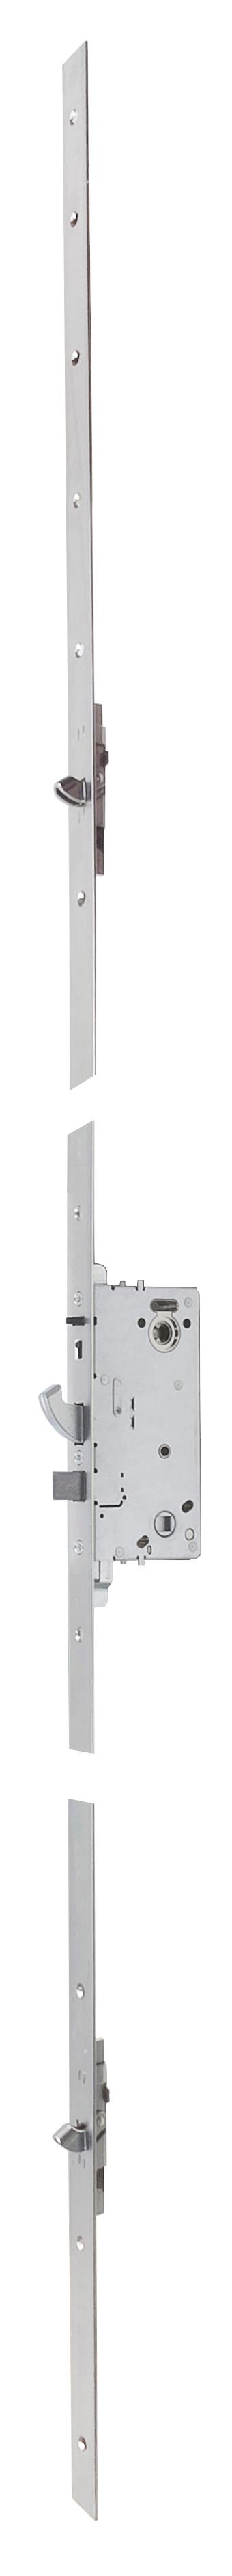 Ruko YD 3-point locking box - 2115mm H, D 50mm, 25mm post